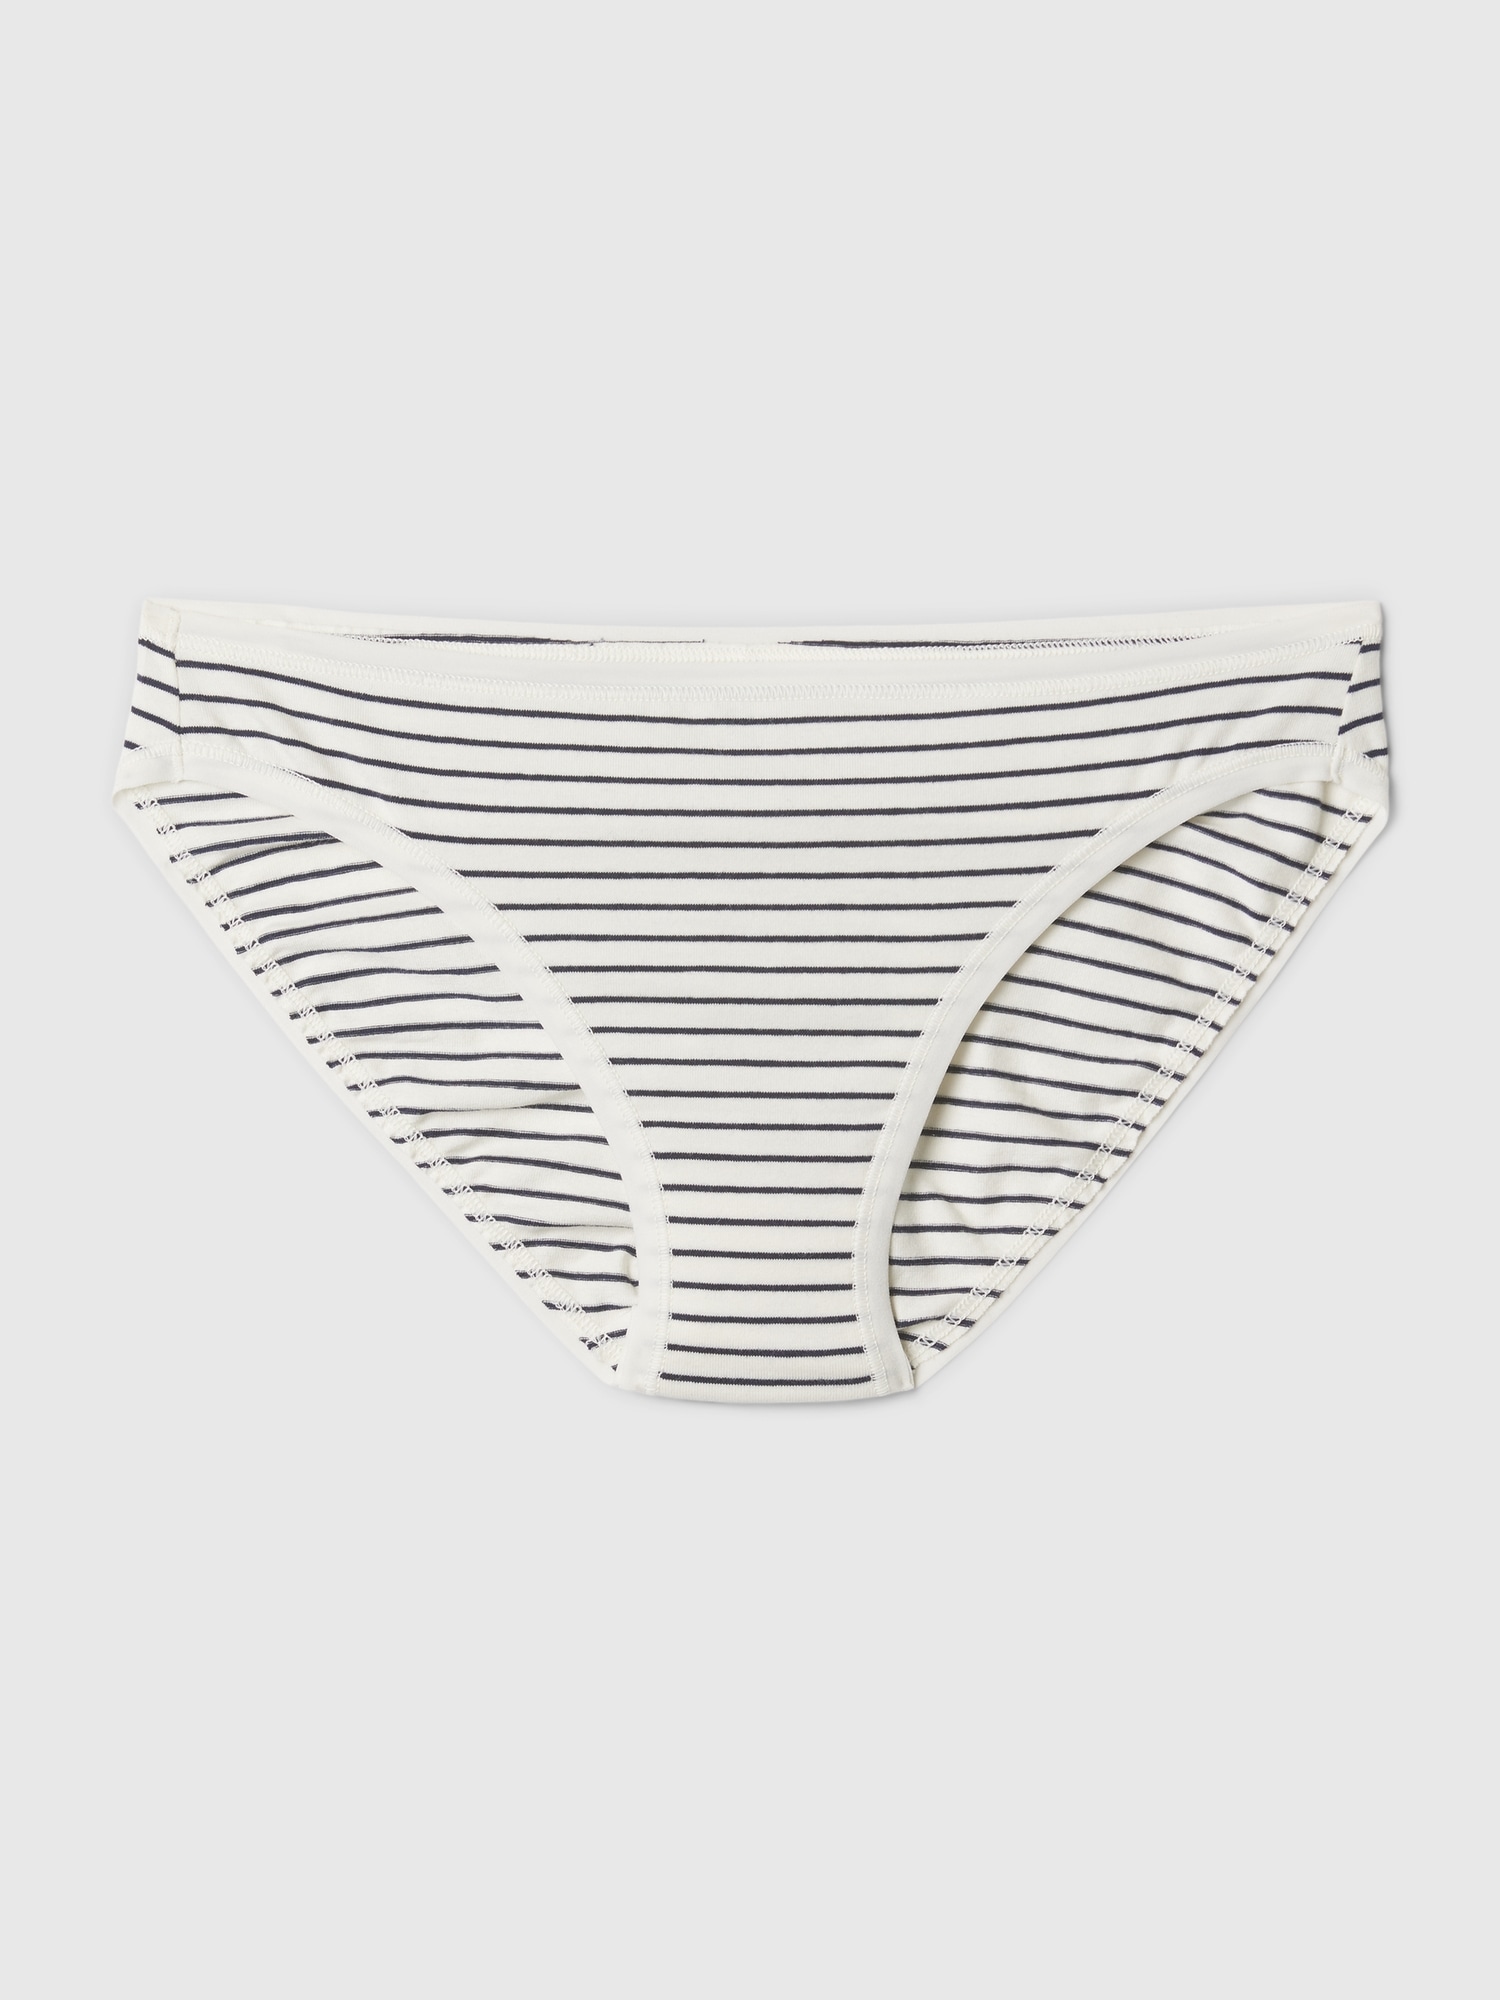 GAP Women's Stretch Cotton Bikini Underpants Underwear : :  Clothing, Shoes & Accessories